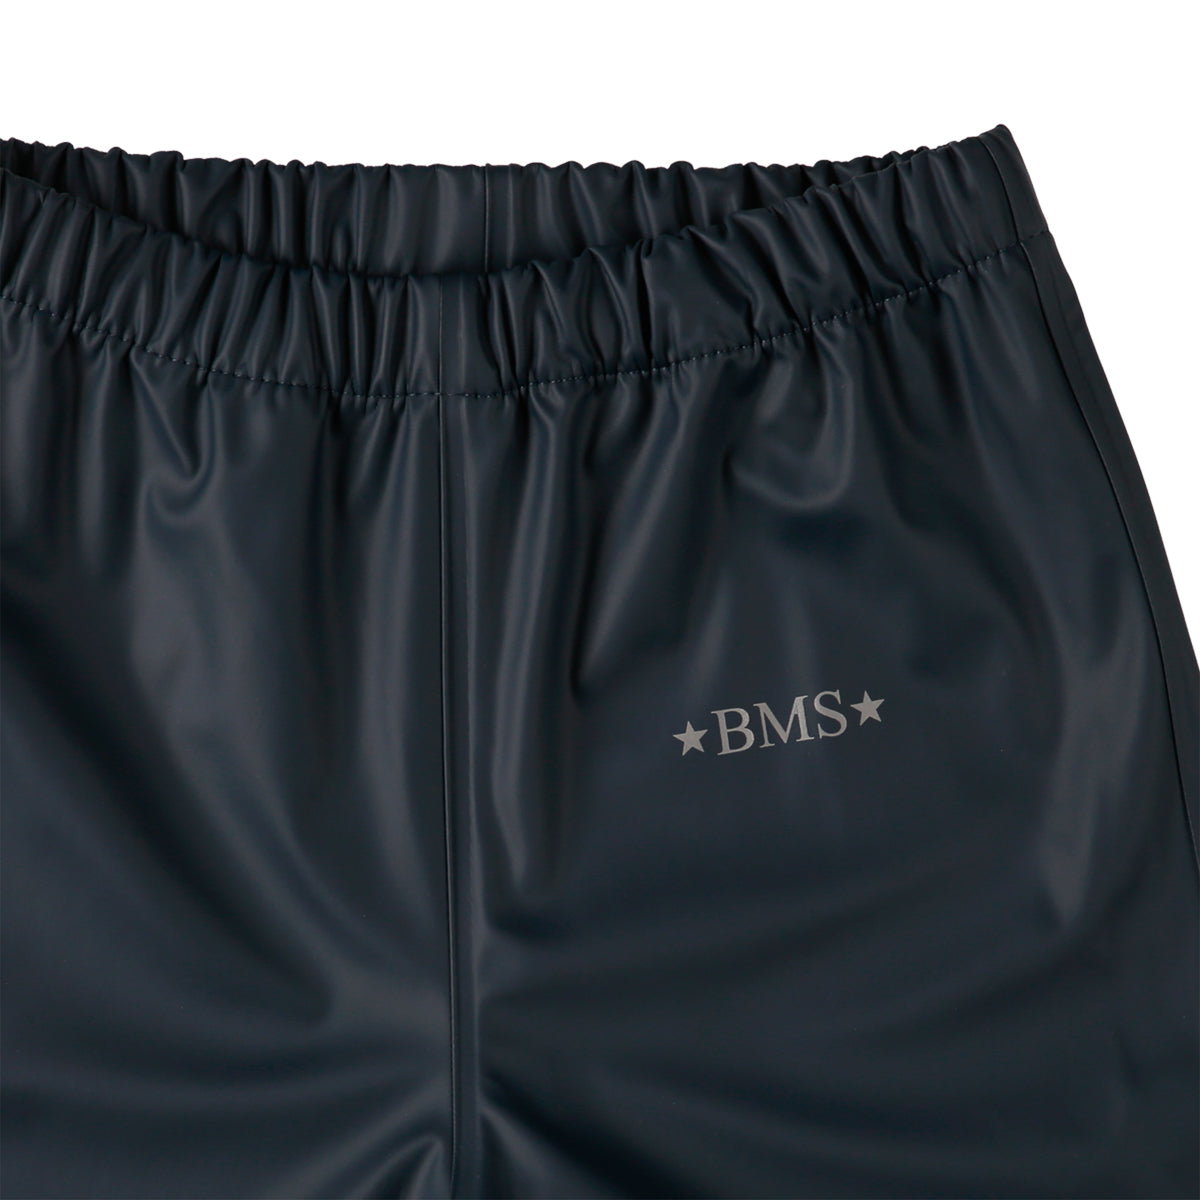 BMS Child Softskin Rain Pants with Elastic Waist Band - SALE - 30% 0FF